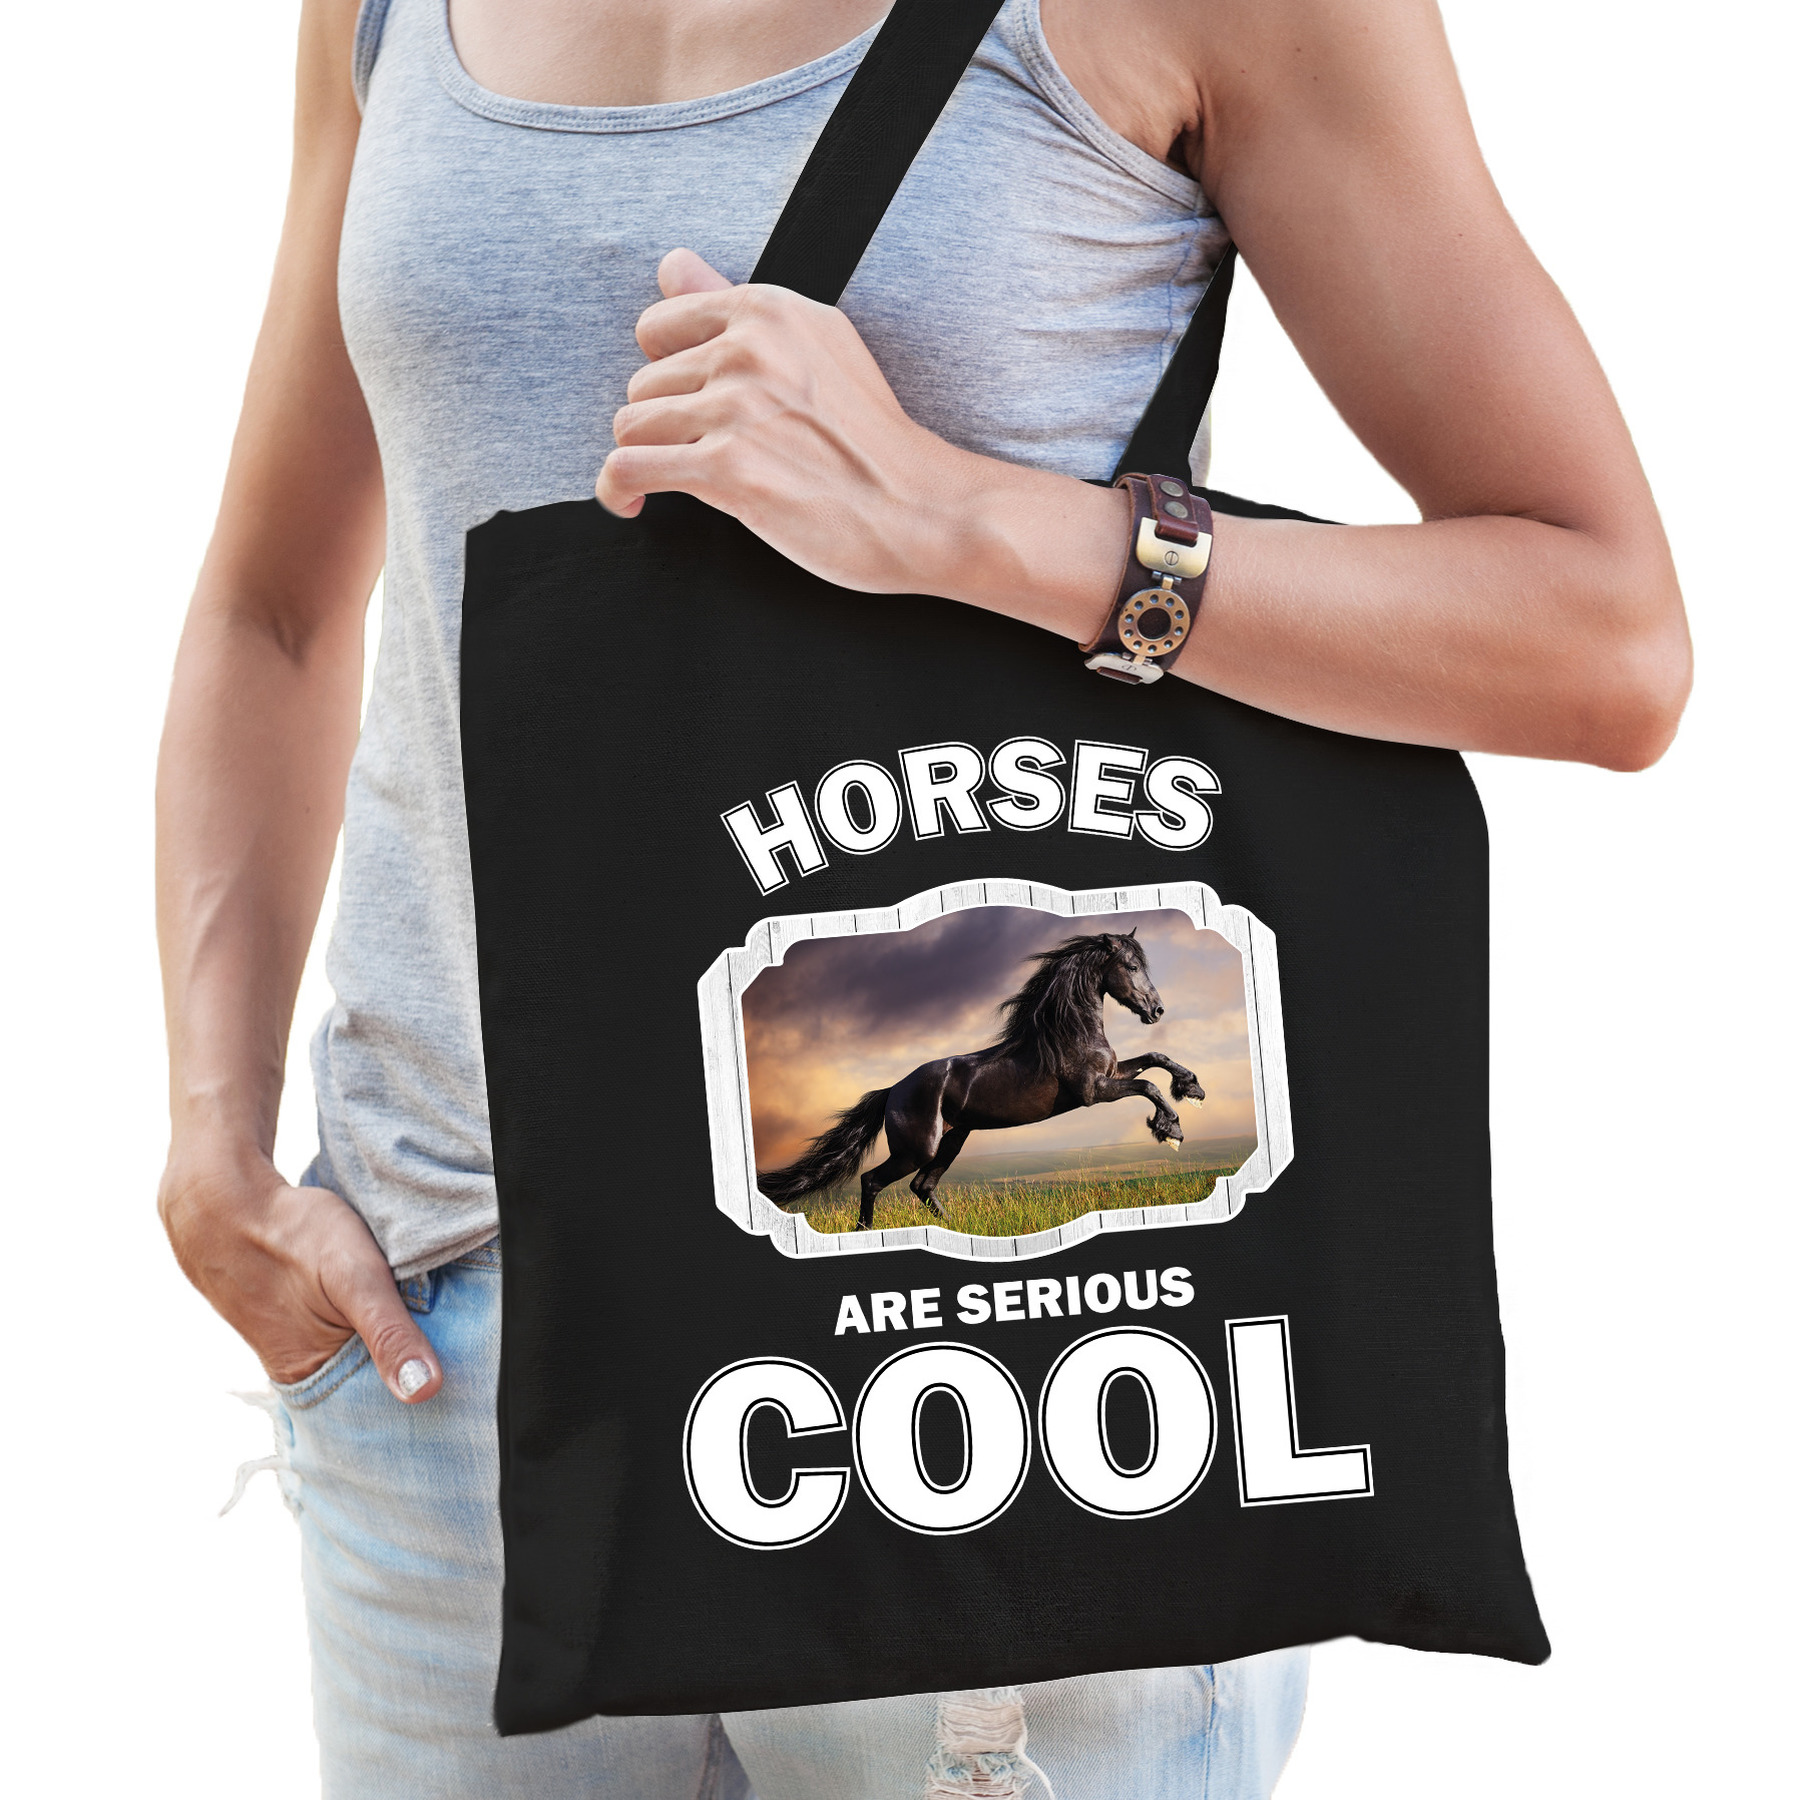 Dieren zwart paard tasje zwart volwassenen en kinderen horses are cool cadeau boodschappentasje